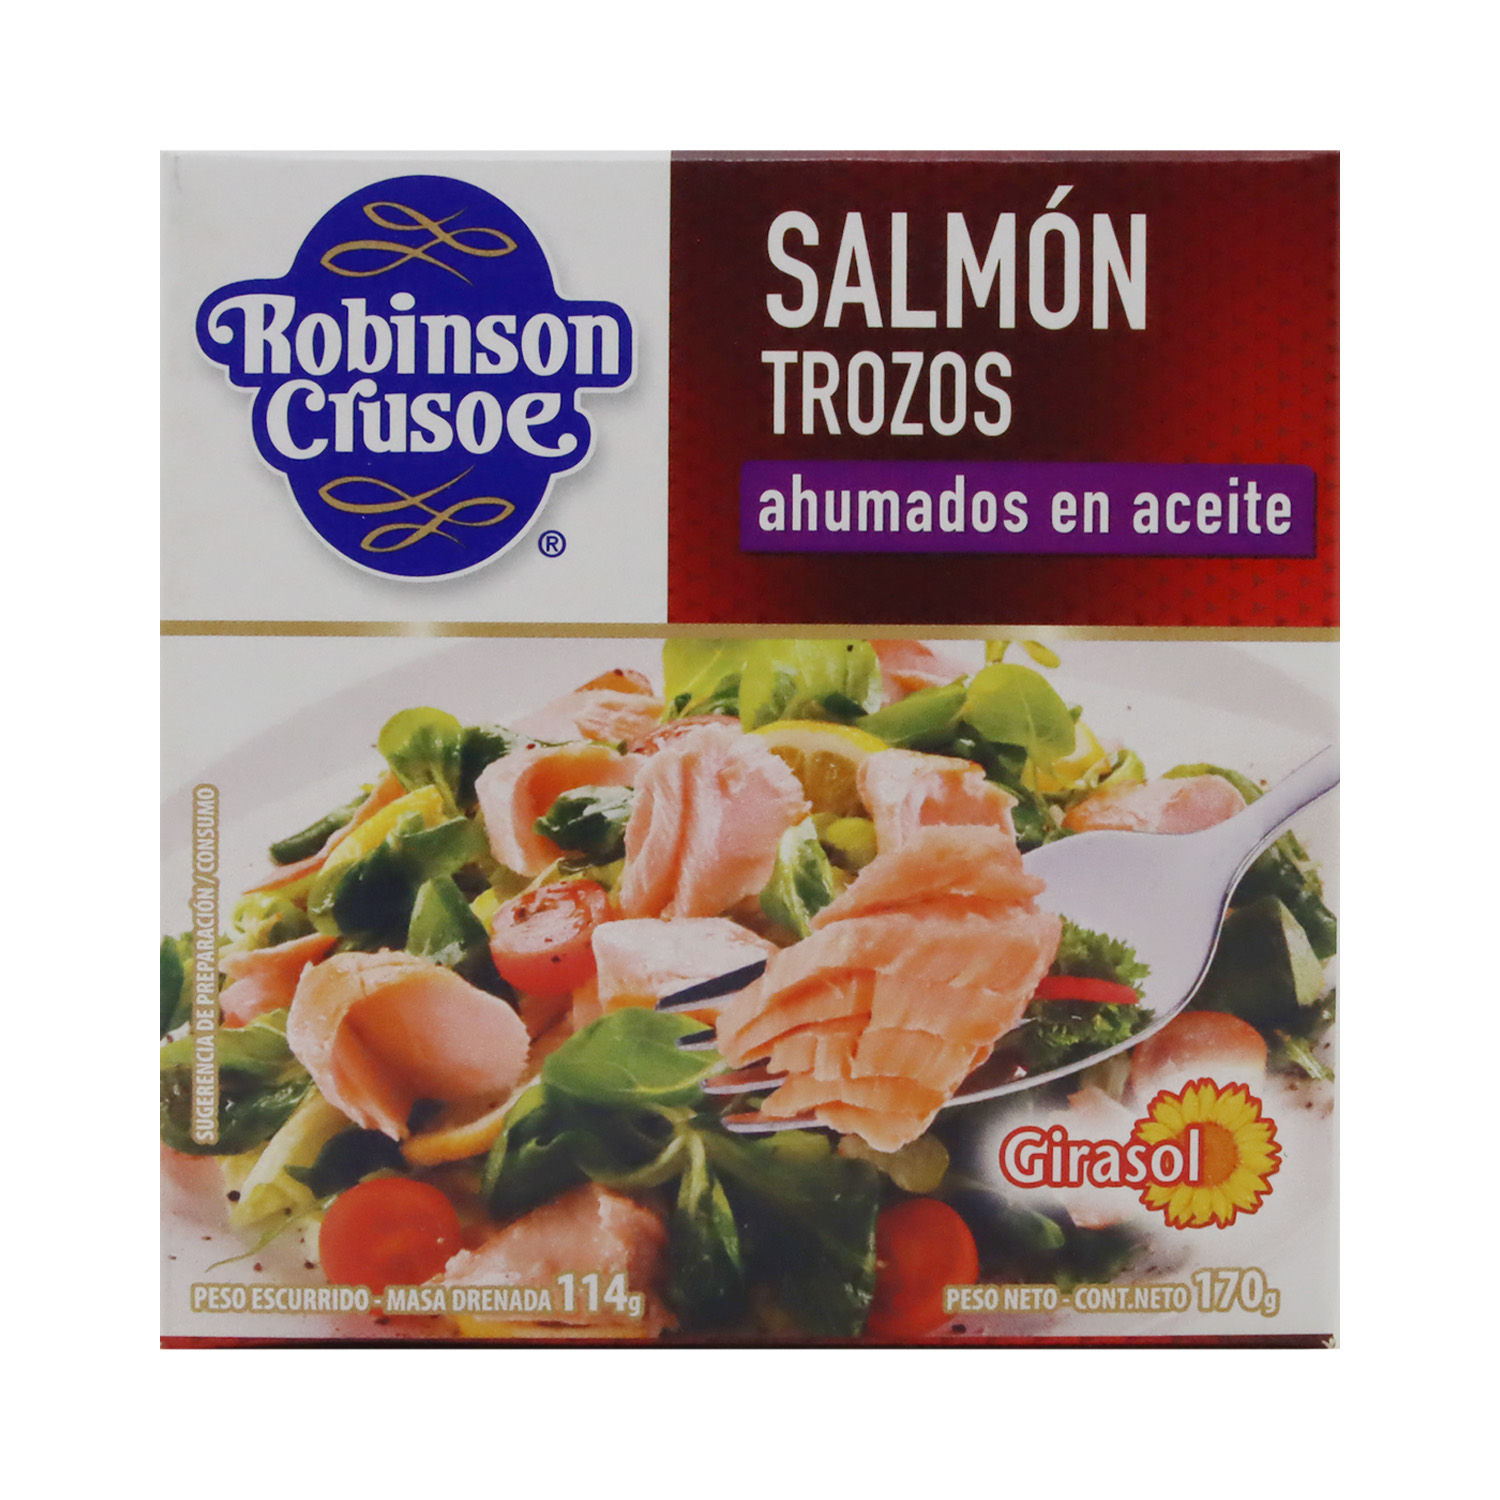 Salmon Ahumado Aceite Trozos Robinson Crusoe